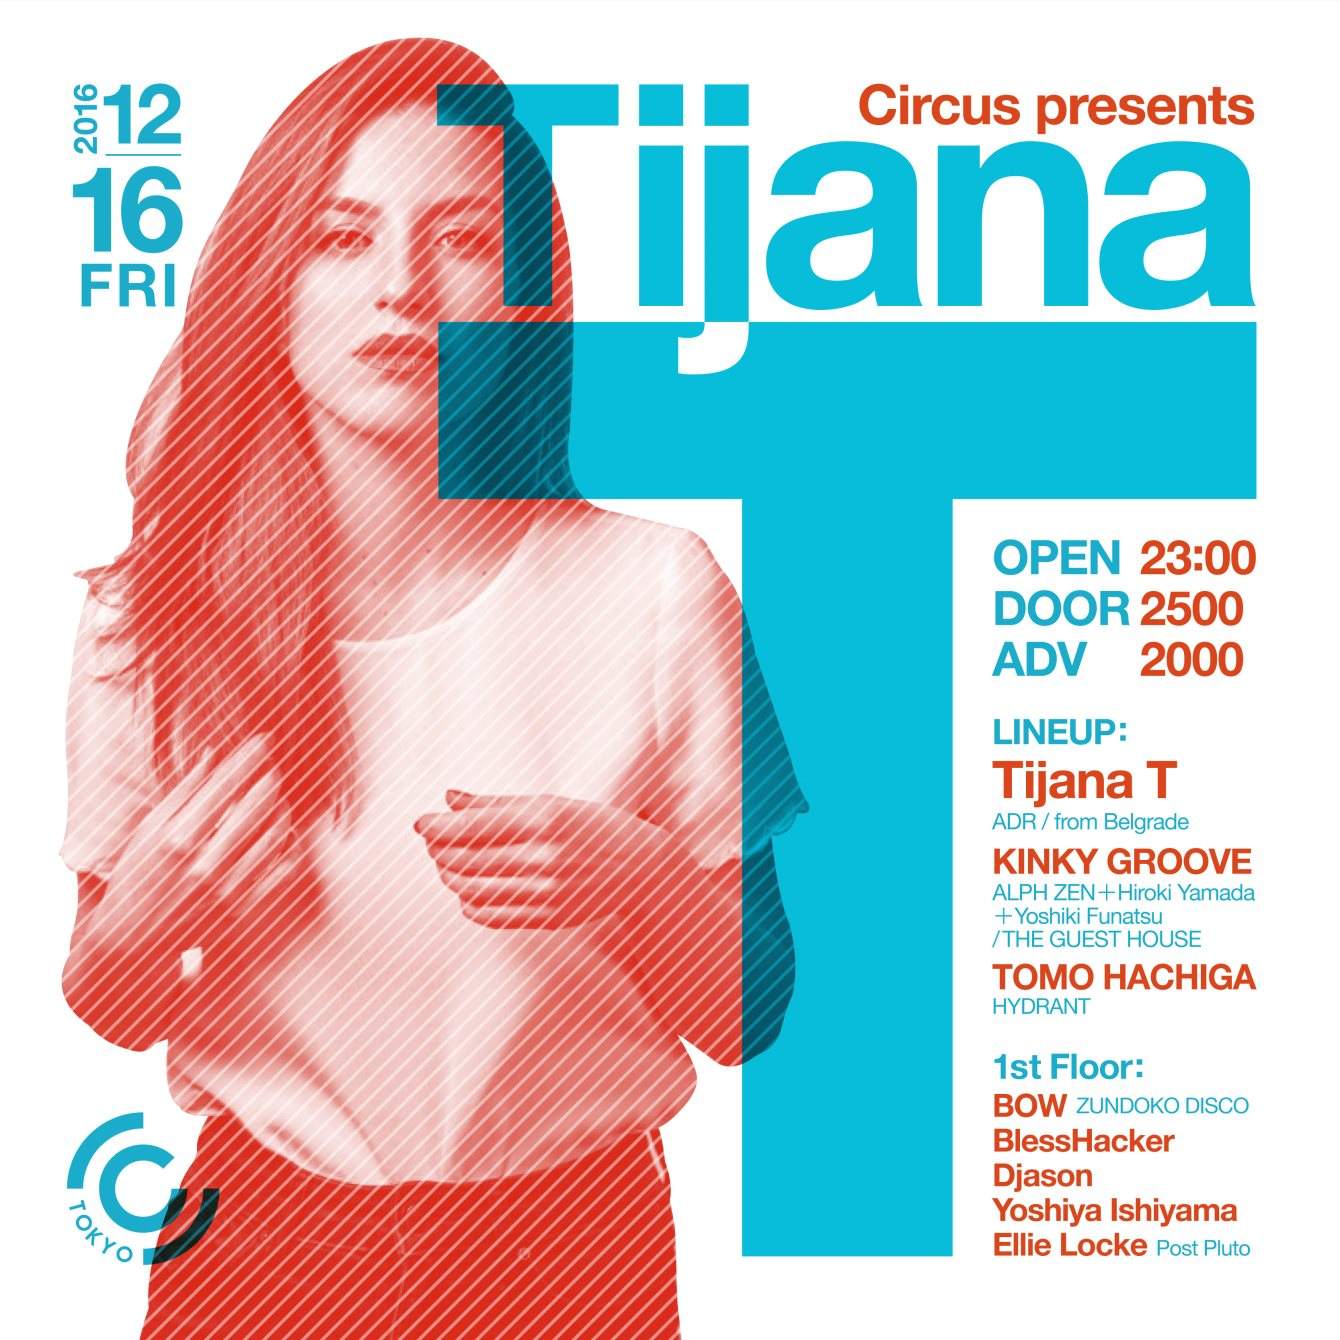 Circus presents Tijana T - フライヤー裏